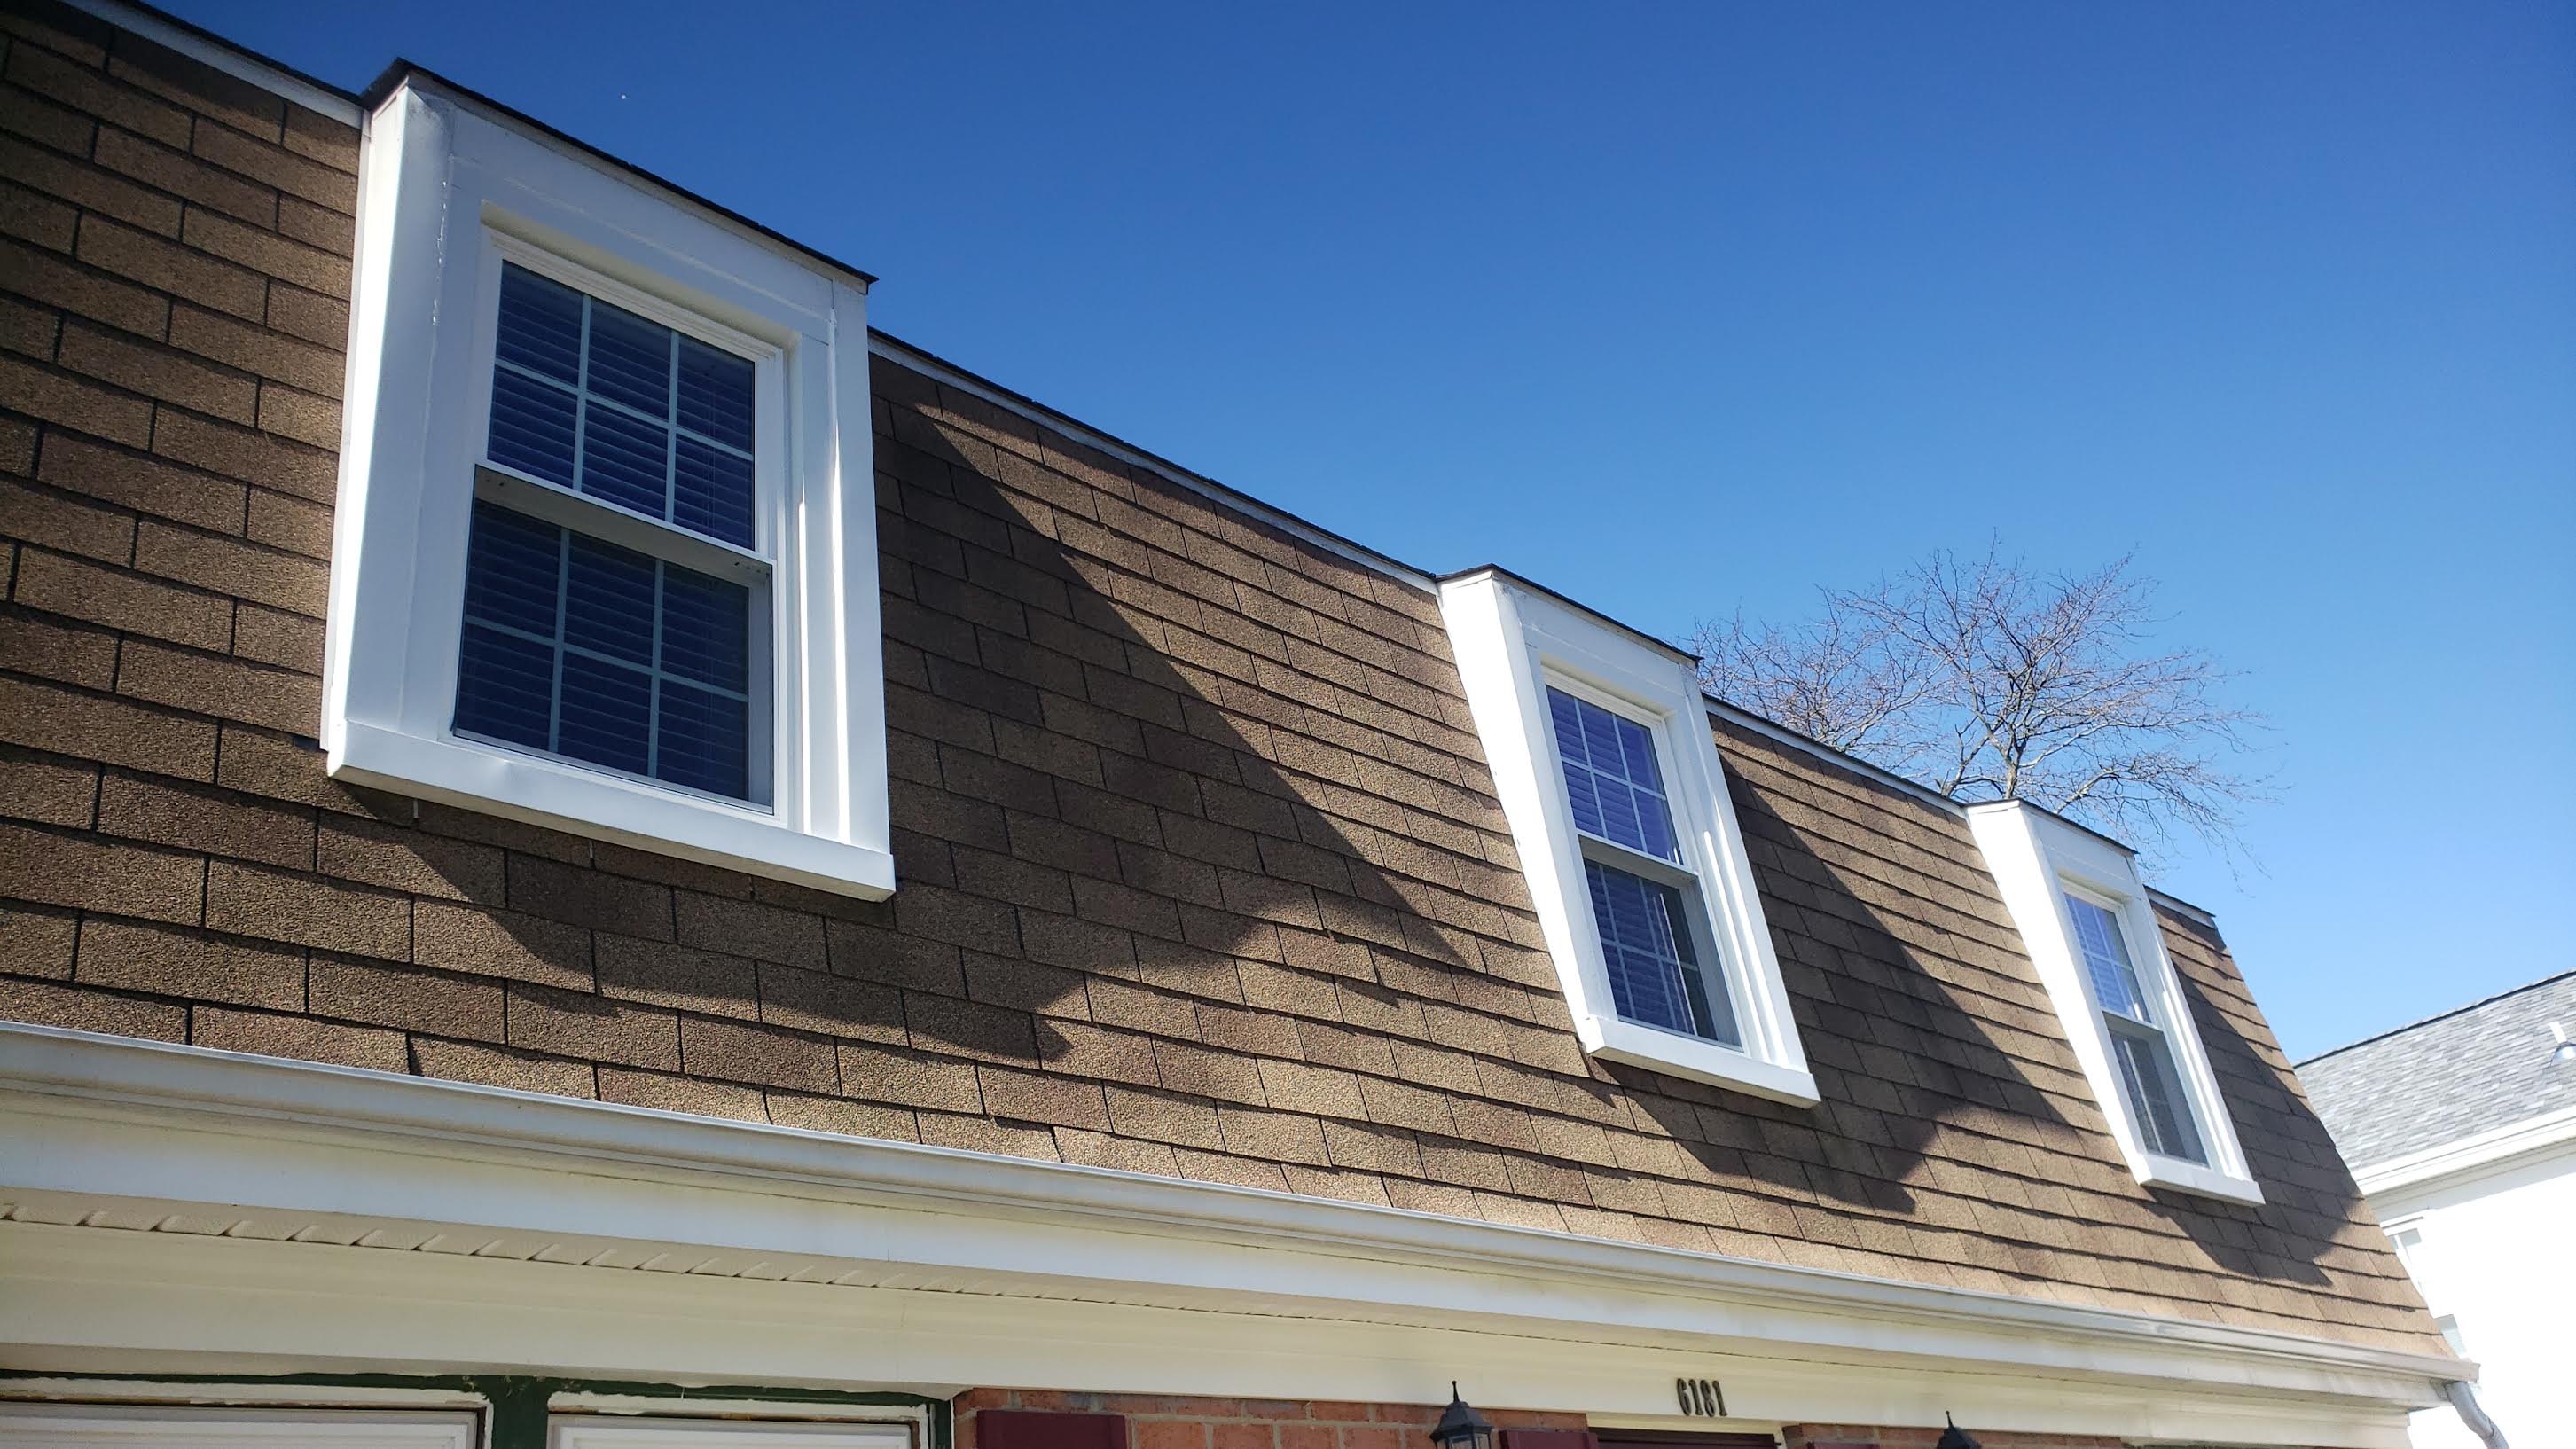 Provia Aspect Window Installation in Columbia, MD 